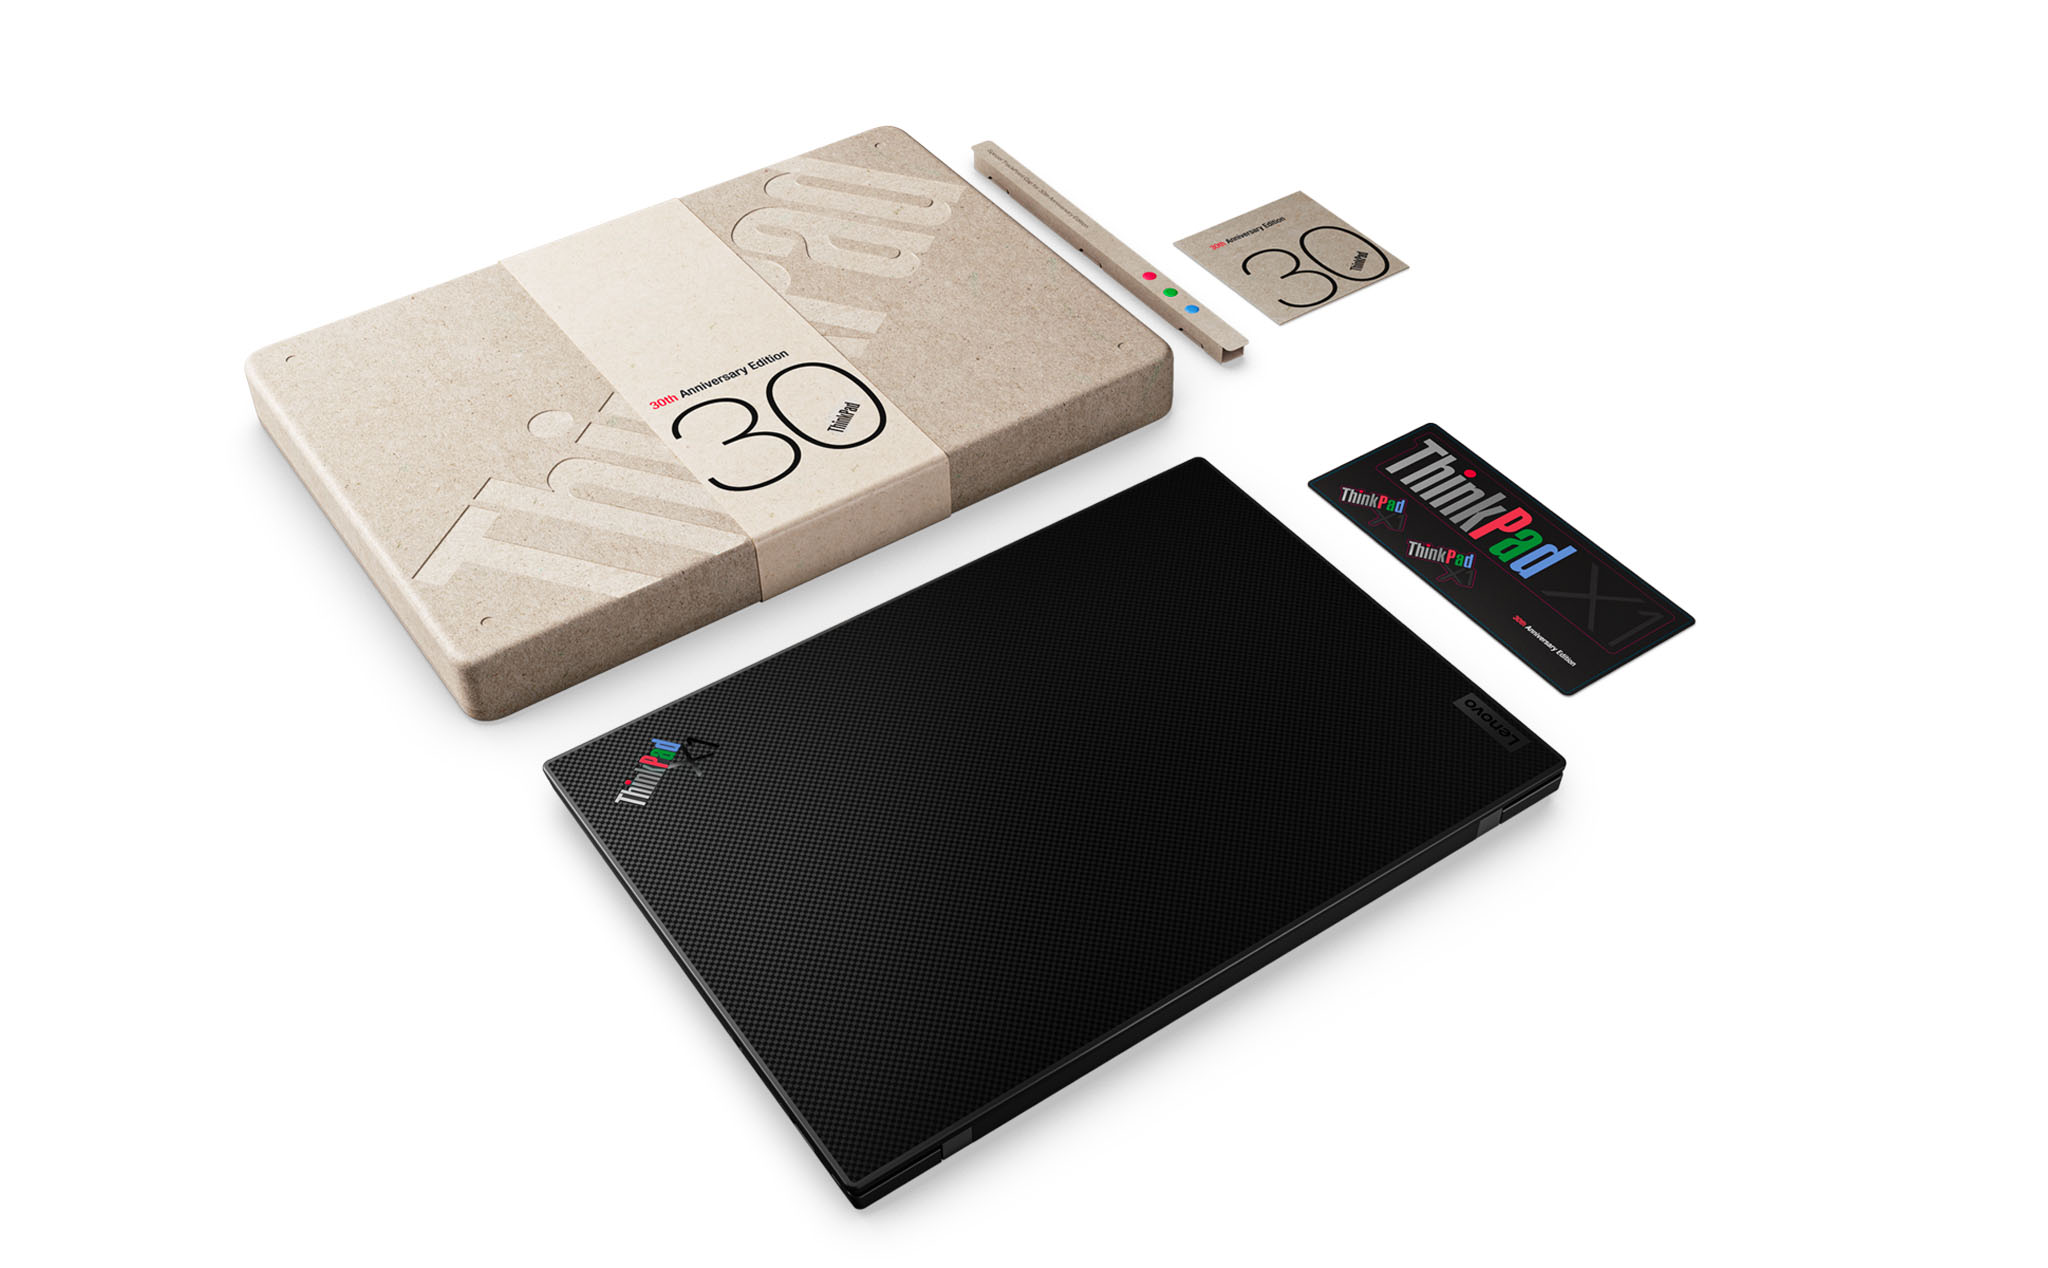 ThinkPad X1 Carbon 30th Anniversary Edition: Phiên bản kỷ niệm 30 năm ThinkPad, giá từ 3.439 USD